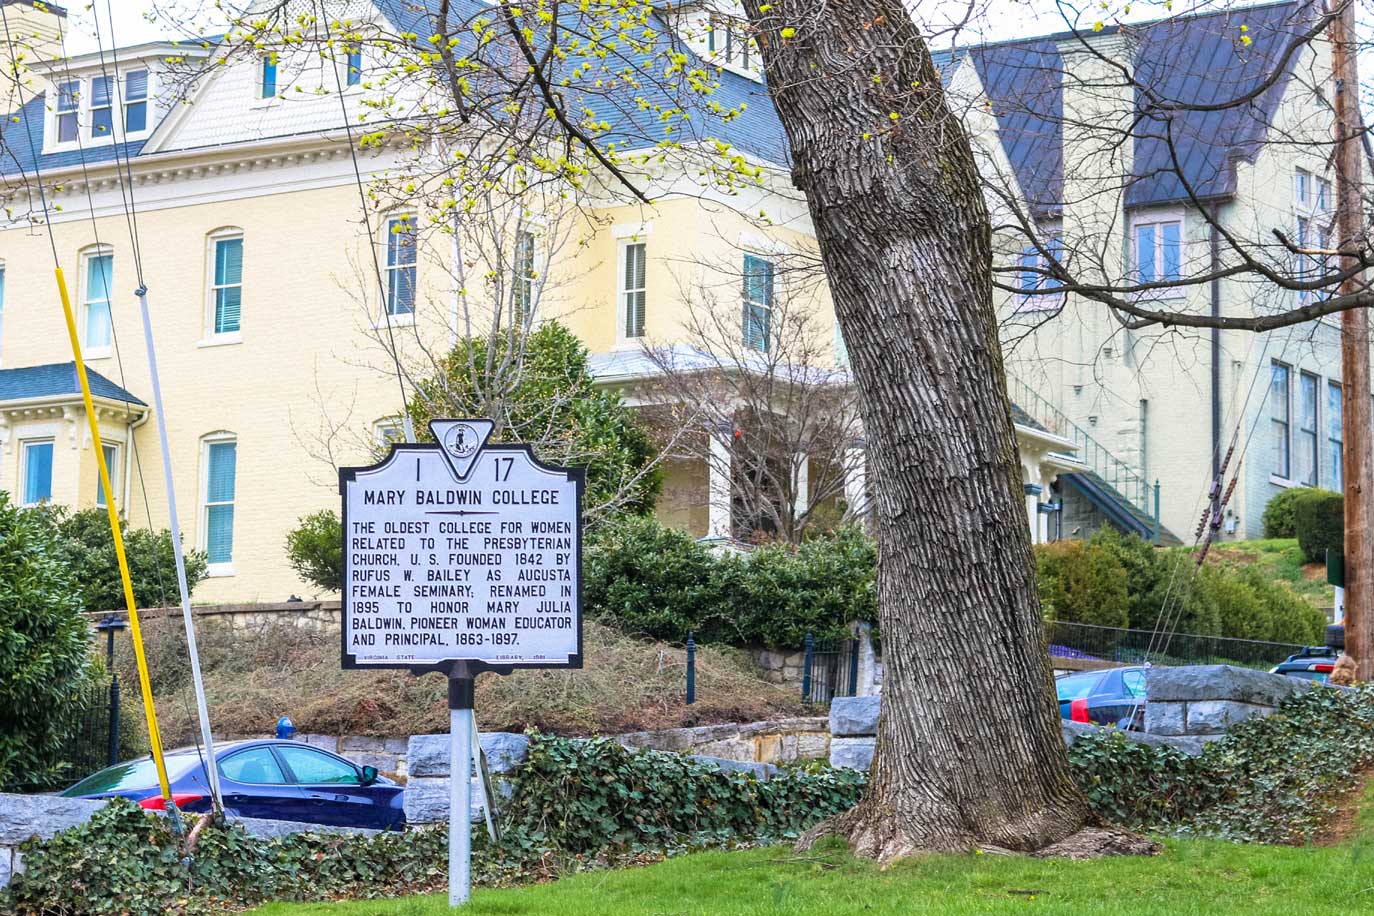 Mary Baldwin historical marker in Staunton, VA